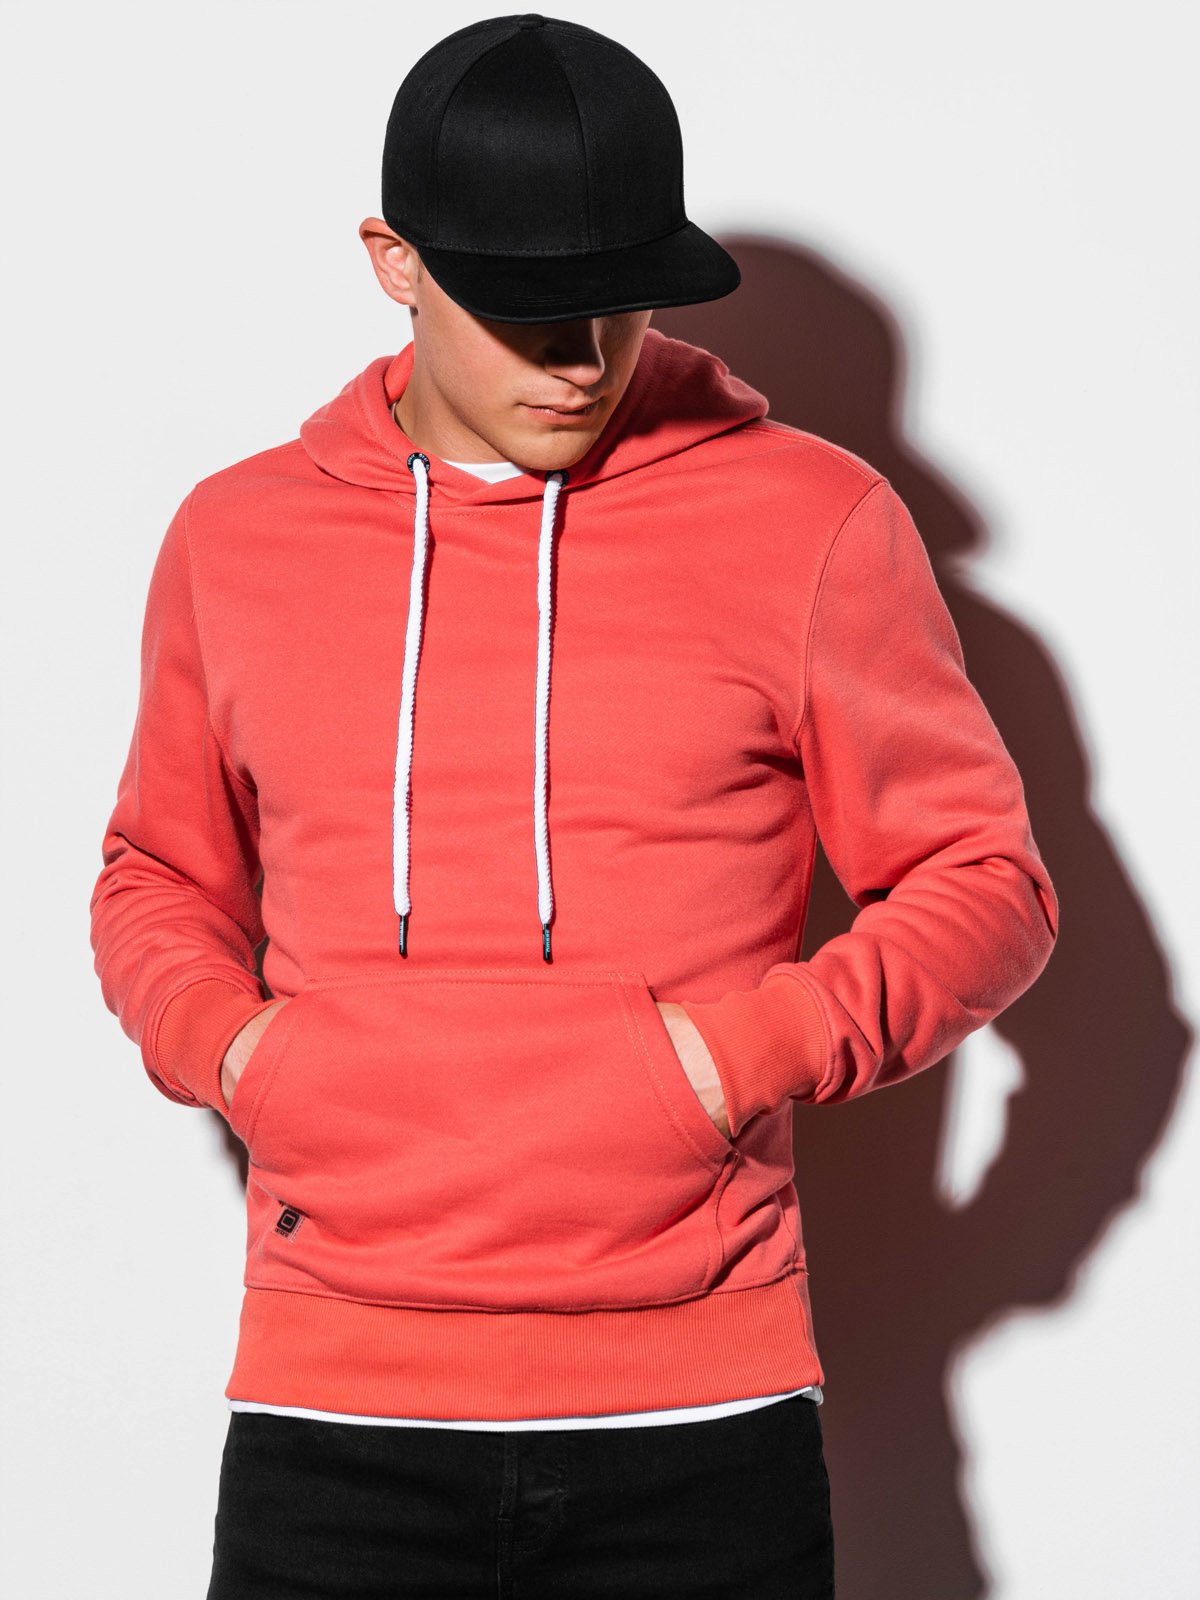 Men's hooded sweatshirt B979 - coral | MODONE wholesale - Clothing For Men